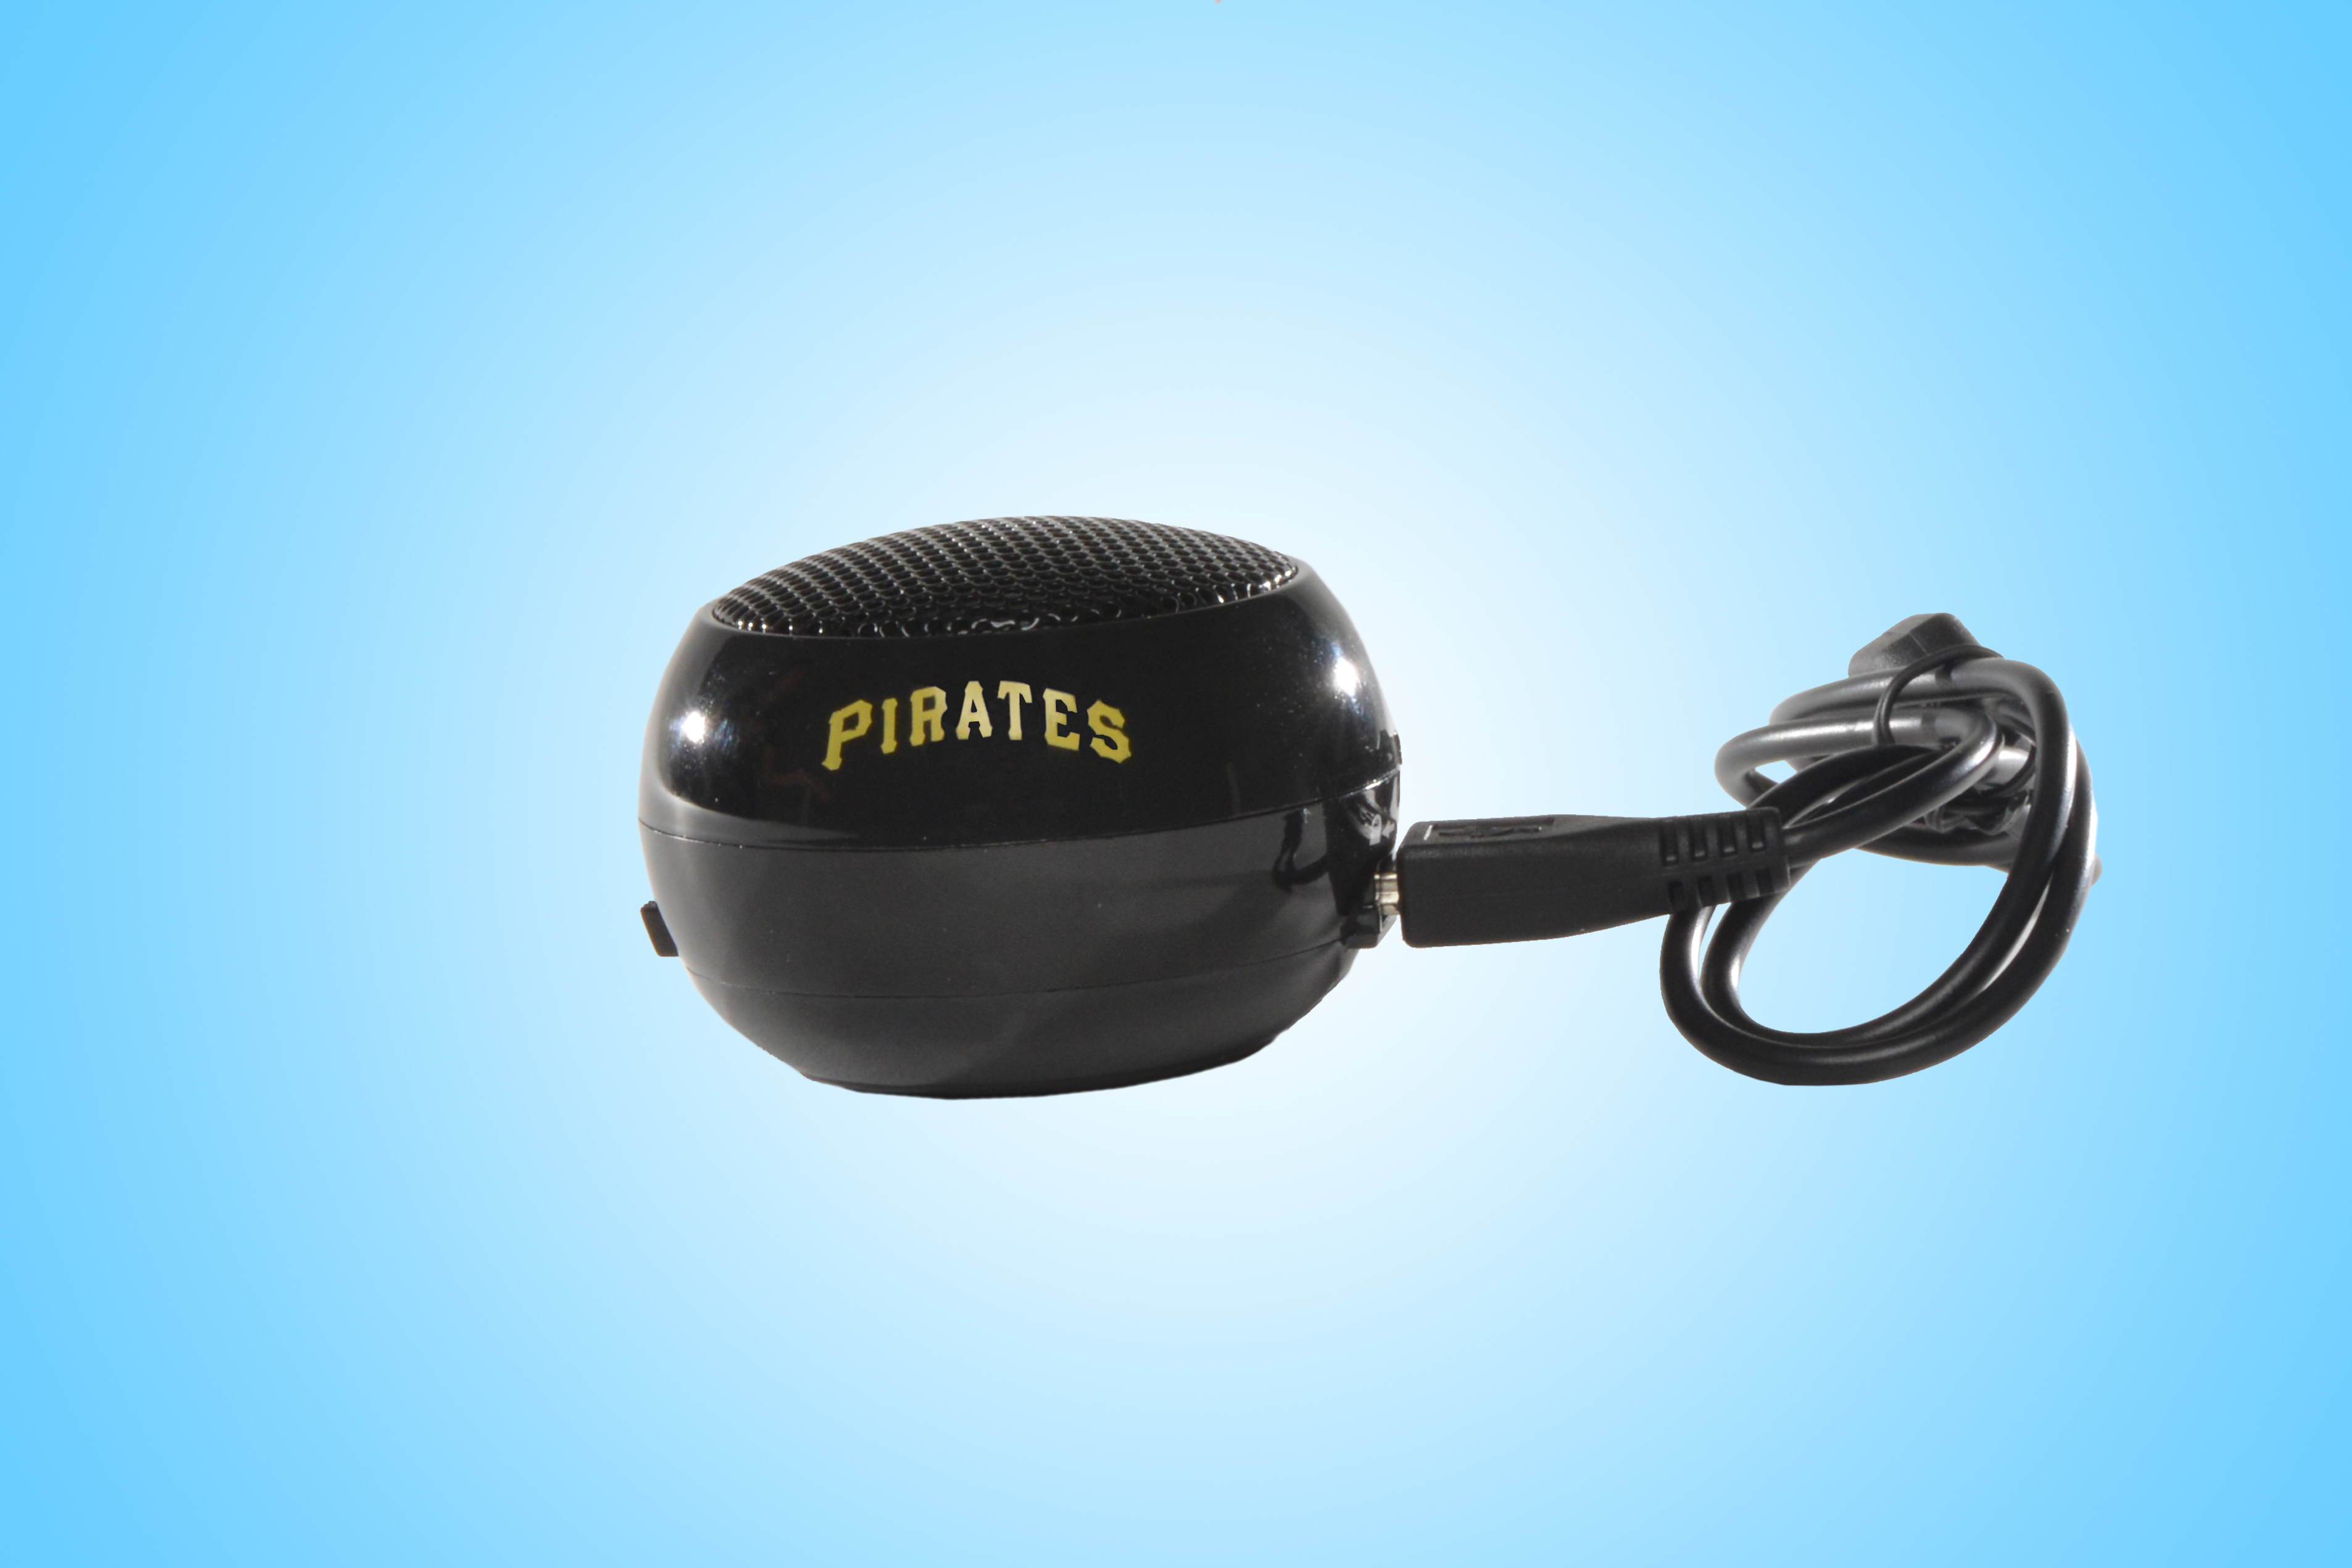 Pittsburgh Pirates speaker